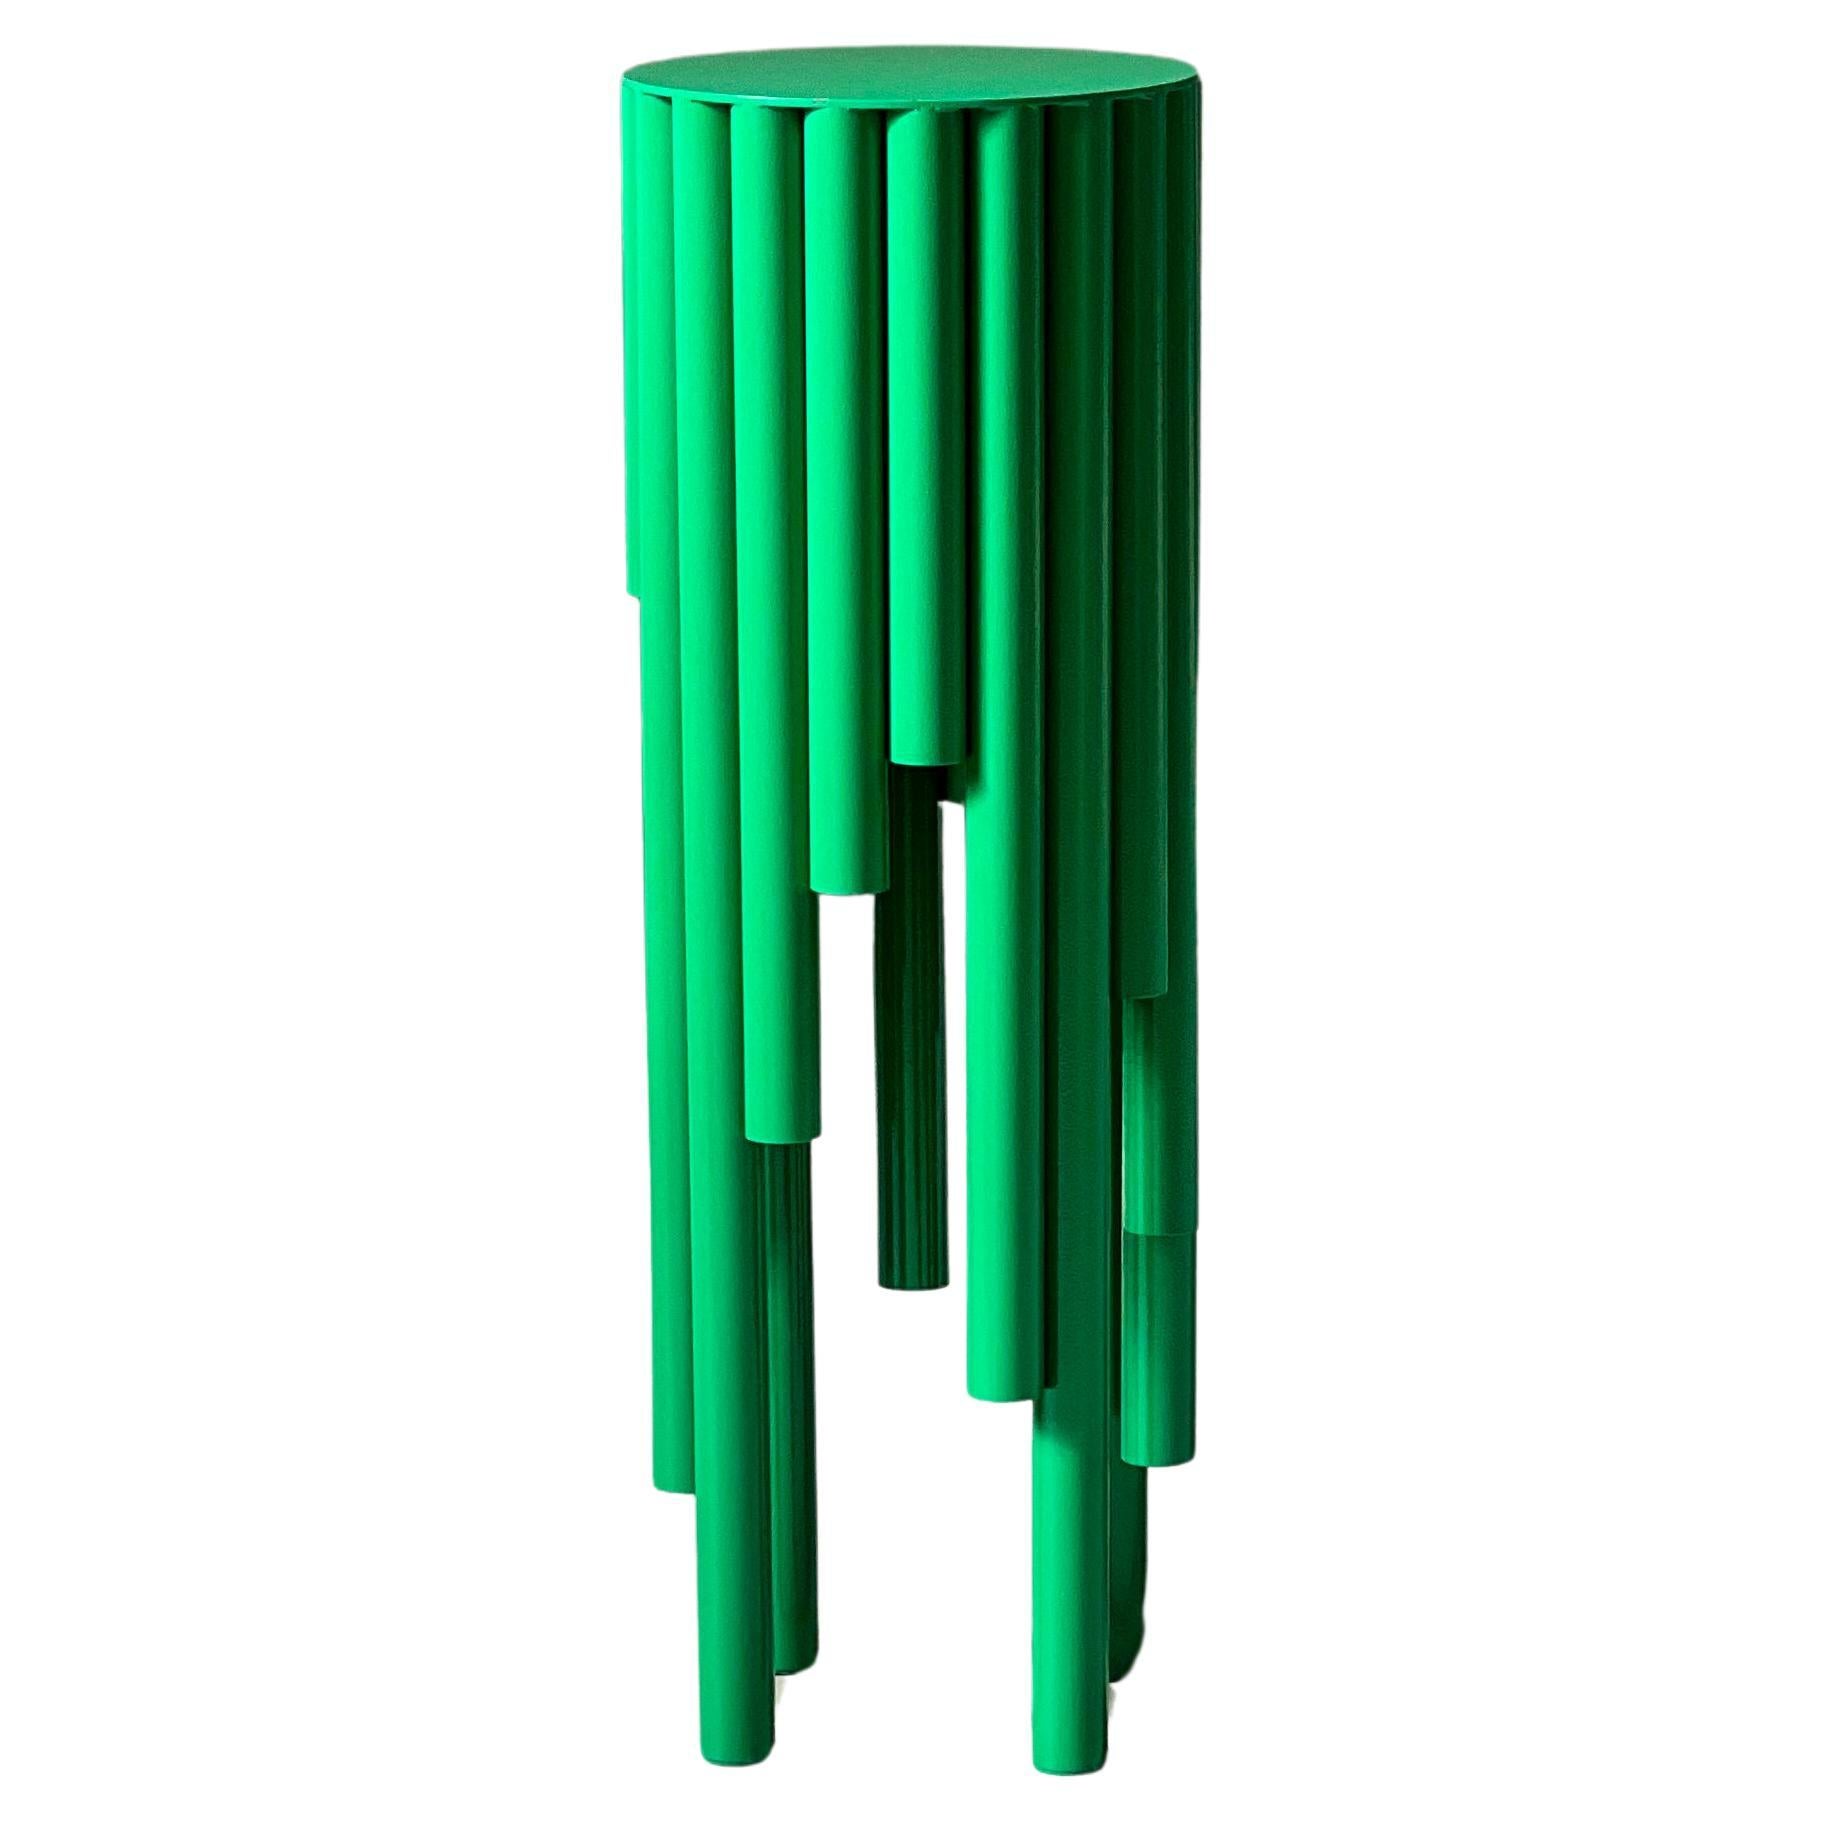 Spinzi Circus Contemporary Side Table, Bright Green, Collectible Design, MDW2024